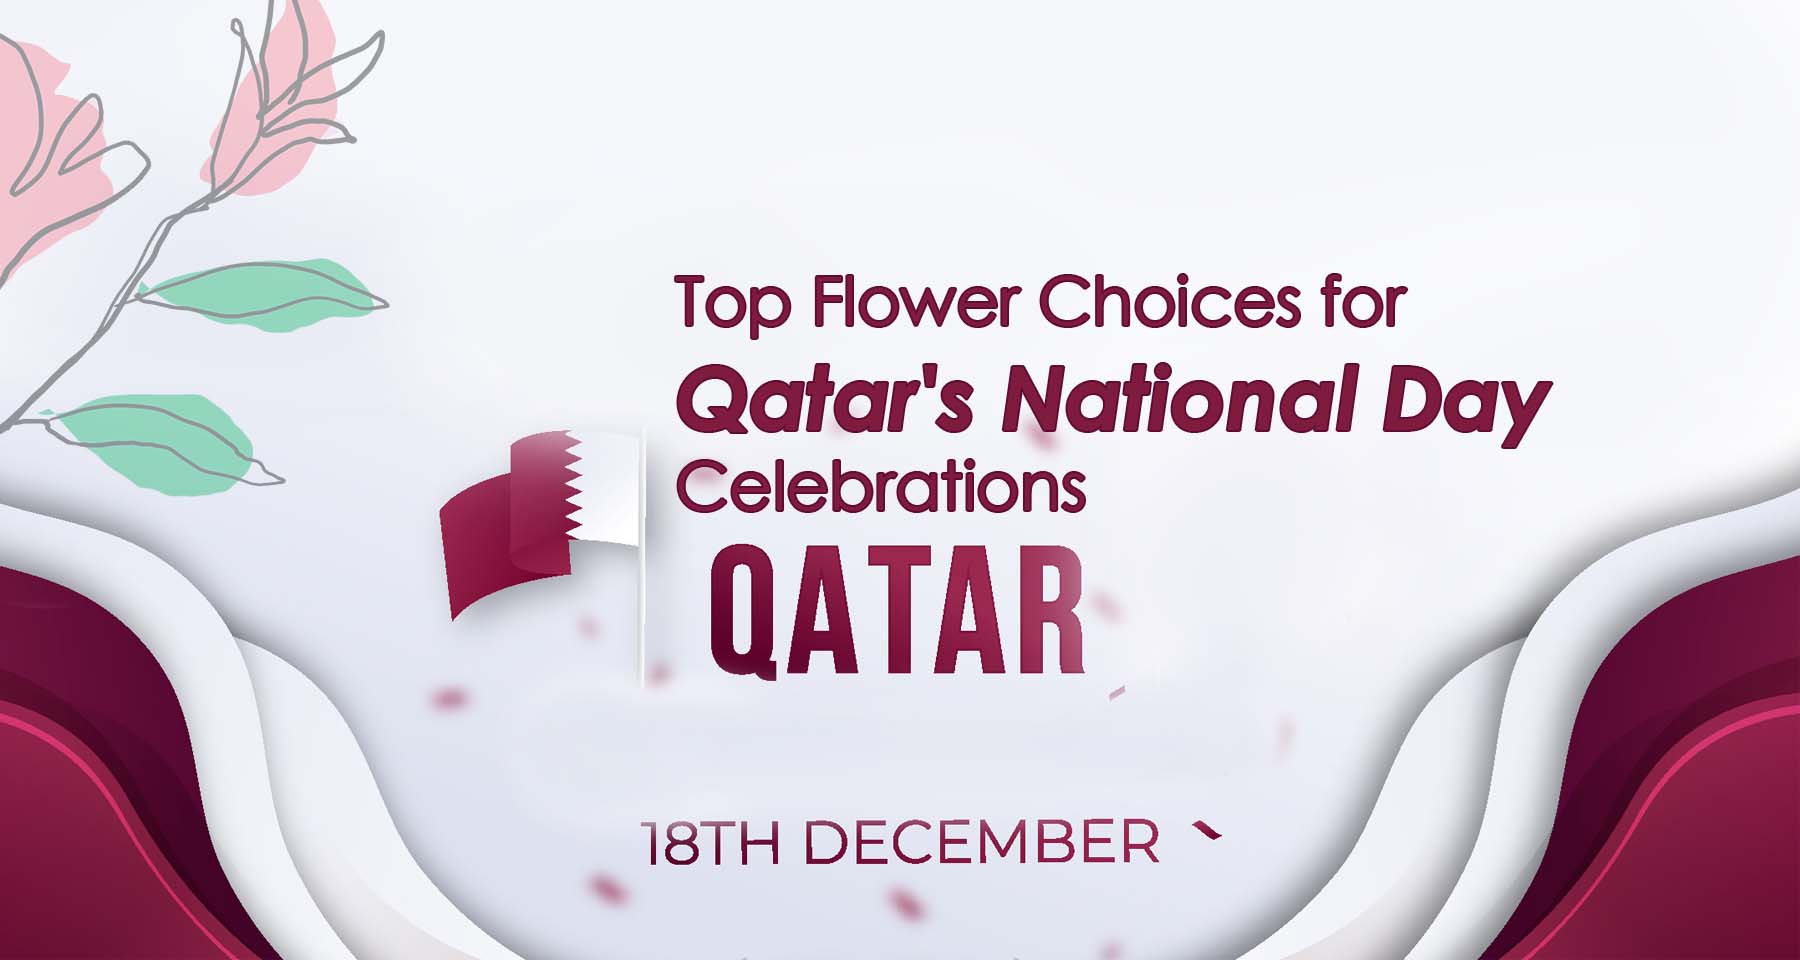 Qatar National Day flowers